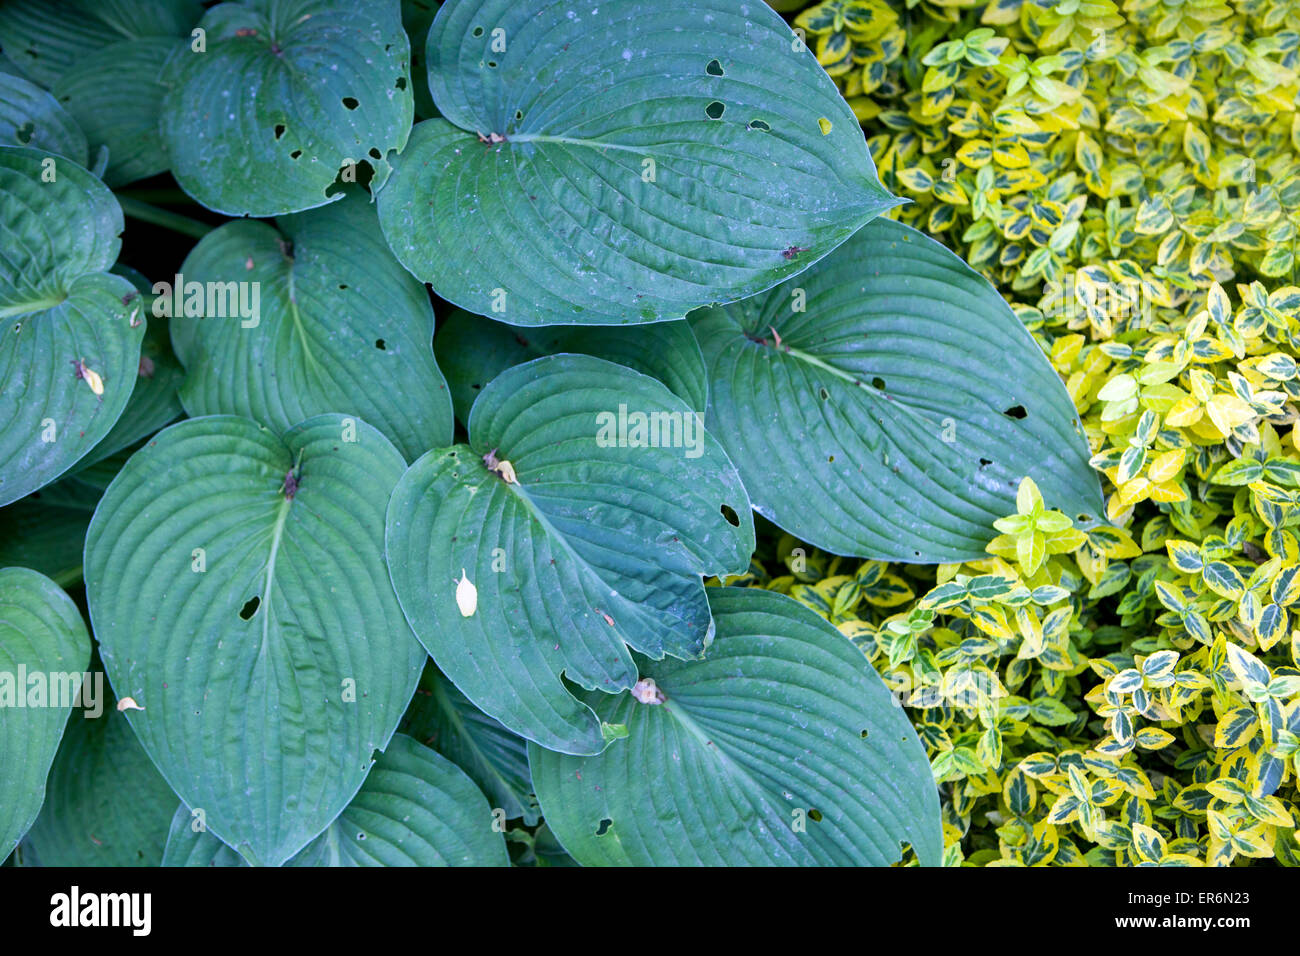 Plant with decorative and ornamental foliage - Hosta, Euonymus fortunei 'Emerald Gold' Stock Photo